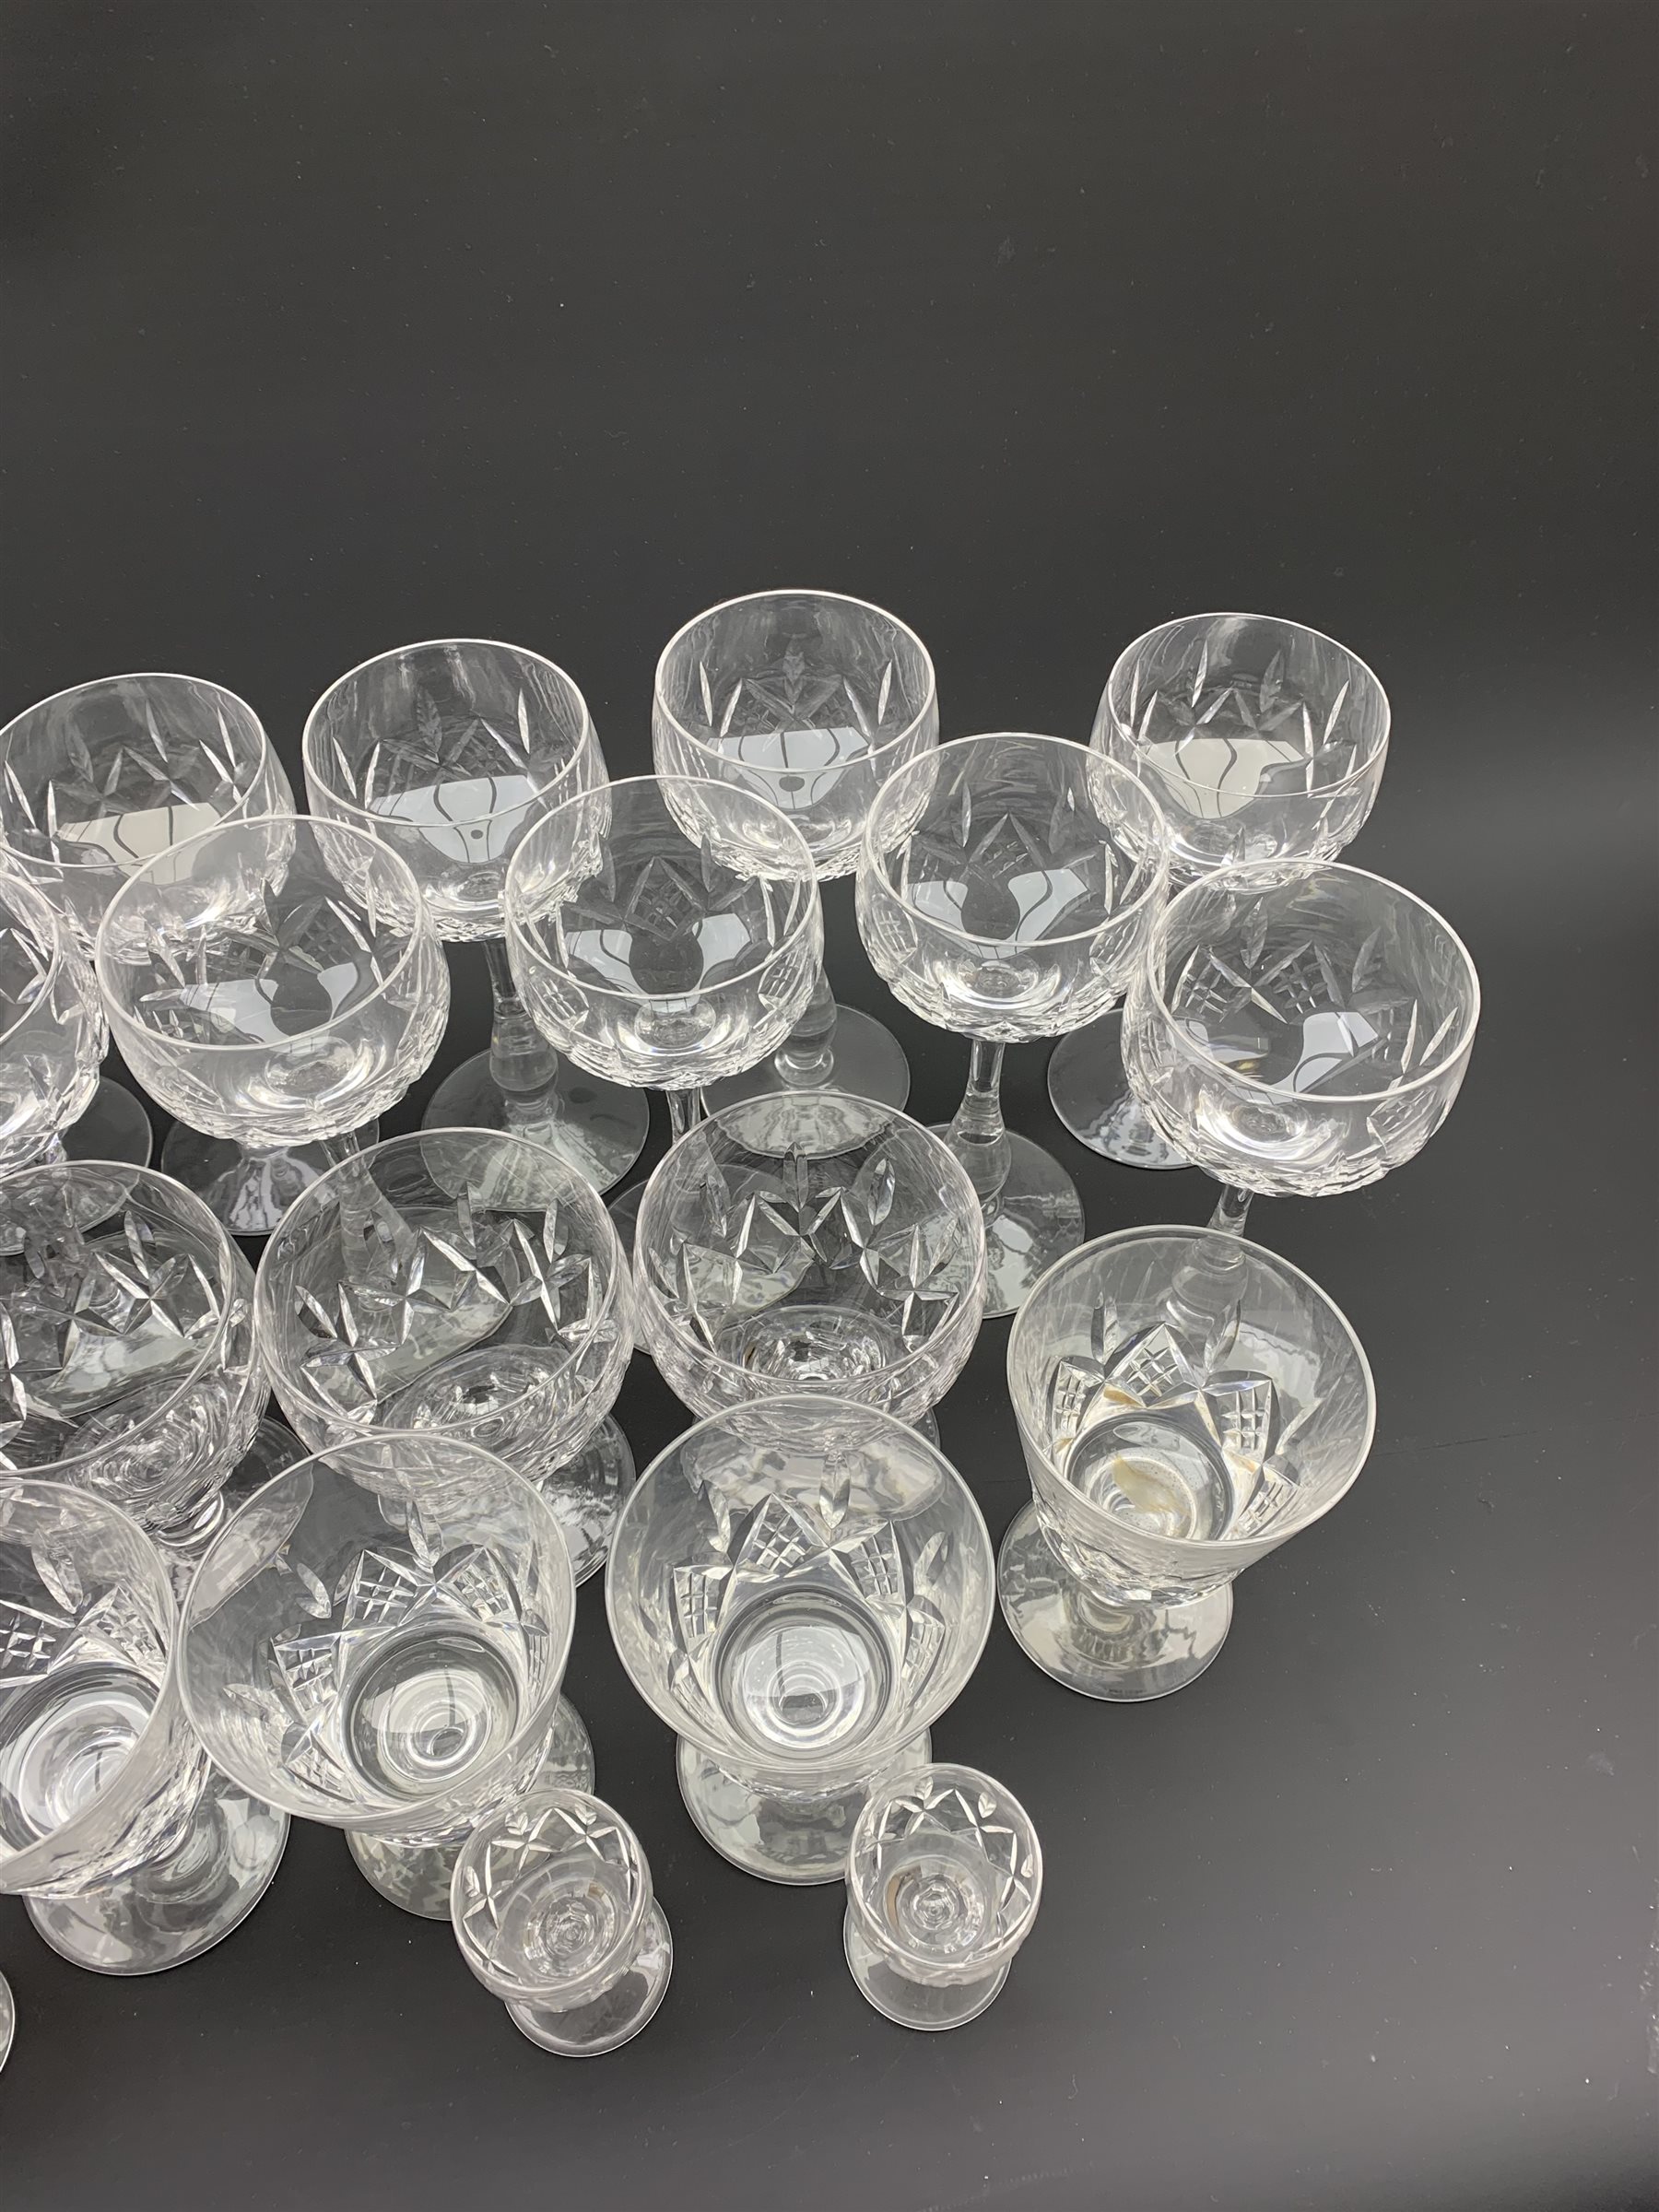 Part suite of Stuart crystal drinking glasses comprising fourteen hock glasses, twelve various shape - Image 3 of 3